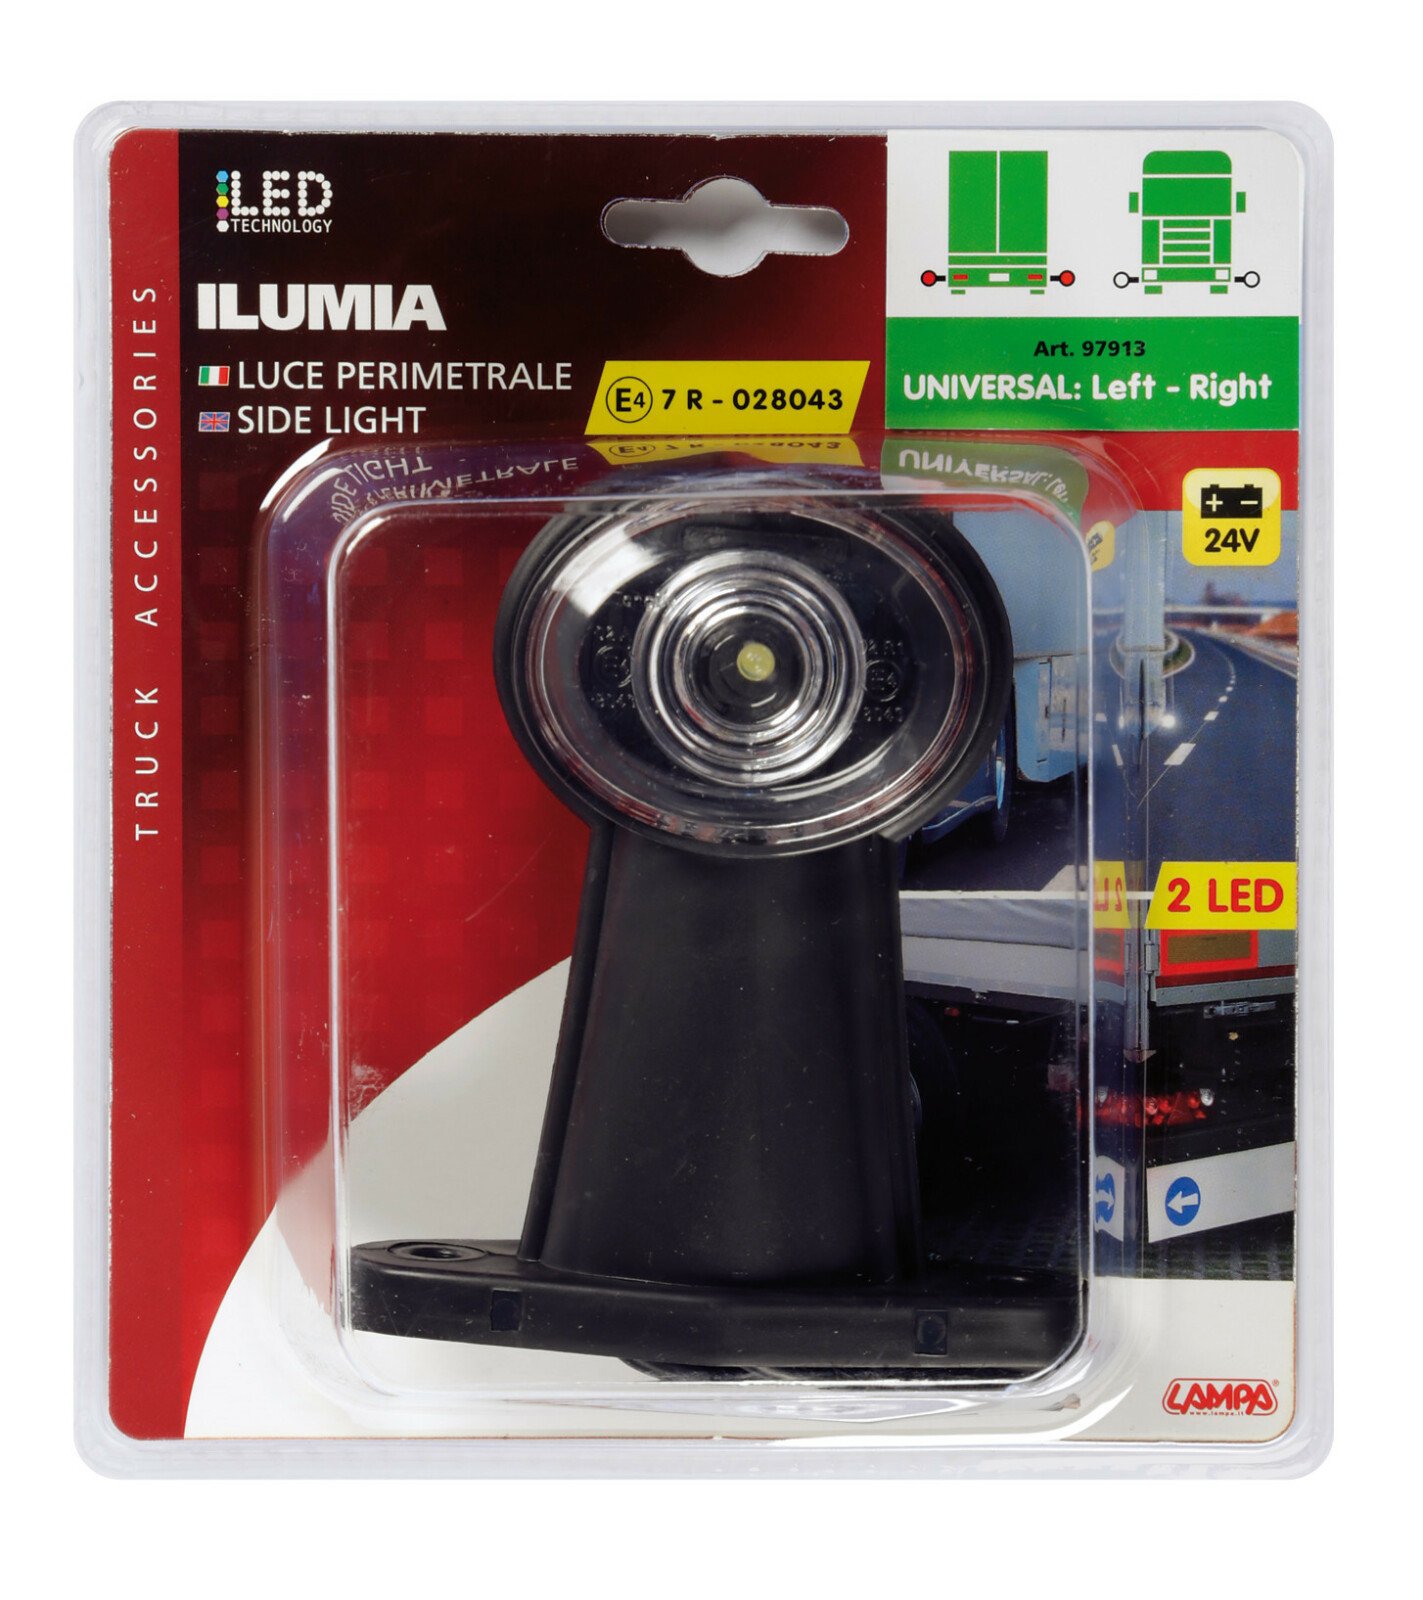 Ilumia, side light, 2 Led, 24V - 60° - Universal thumb